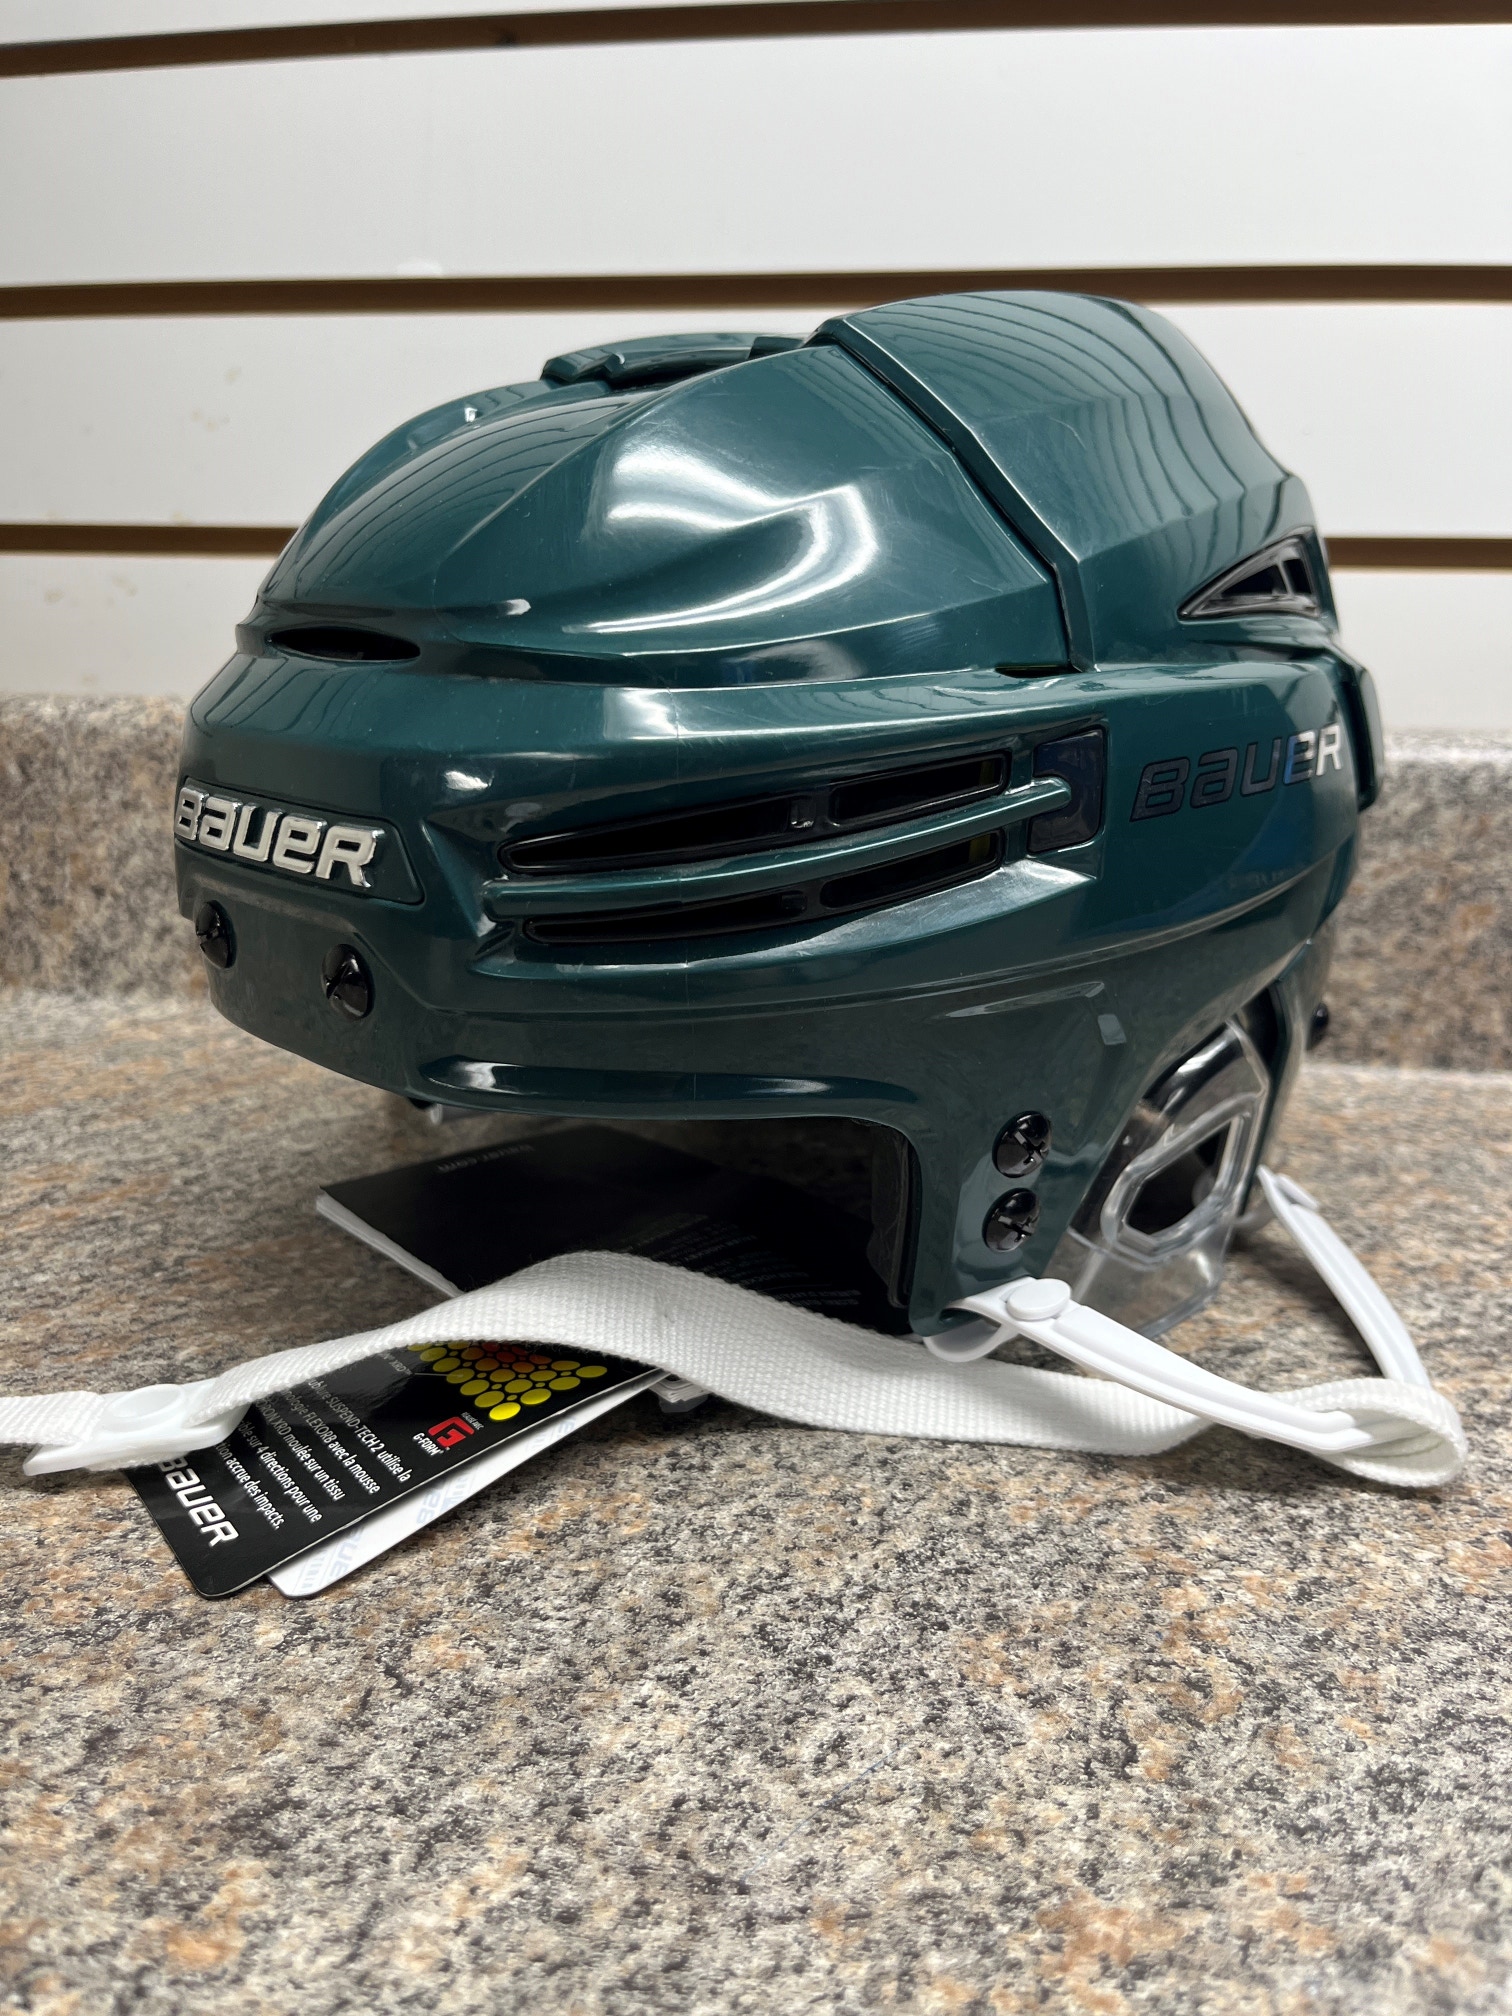 New Small Bauer Re-Akt 100 Helmet